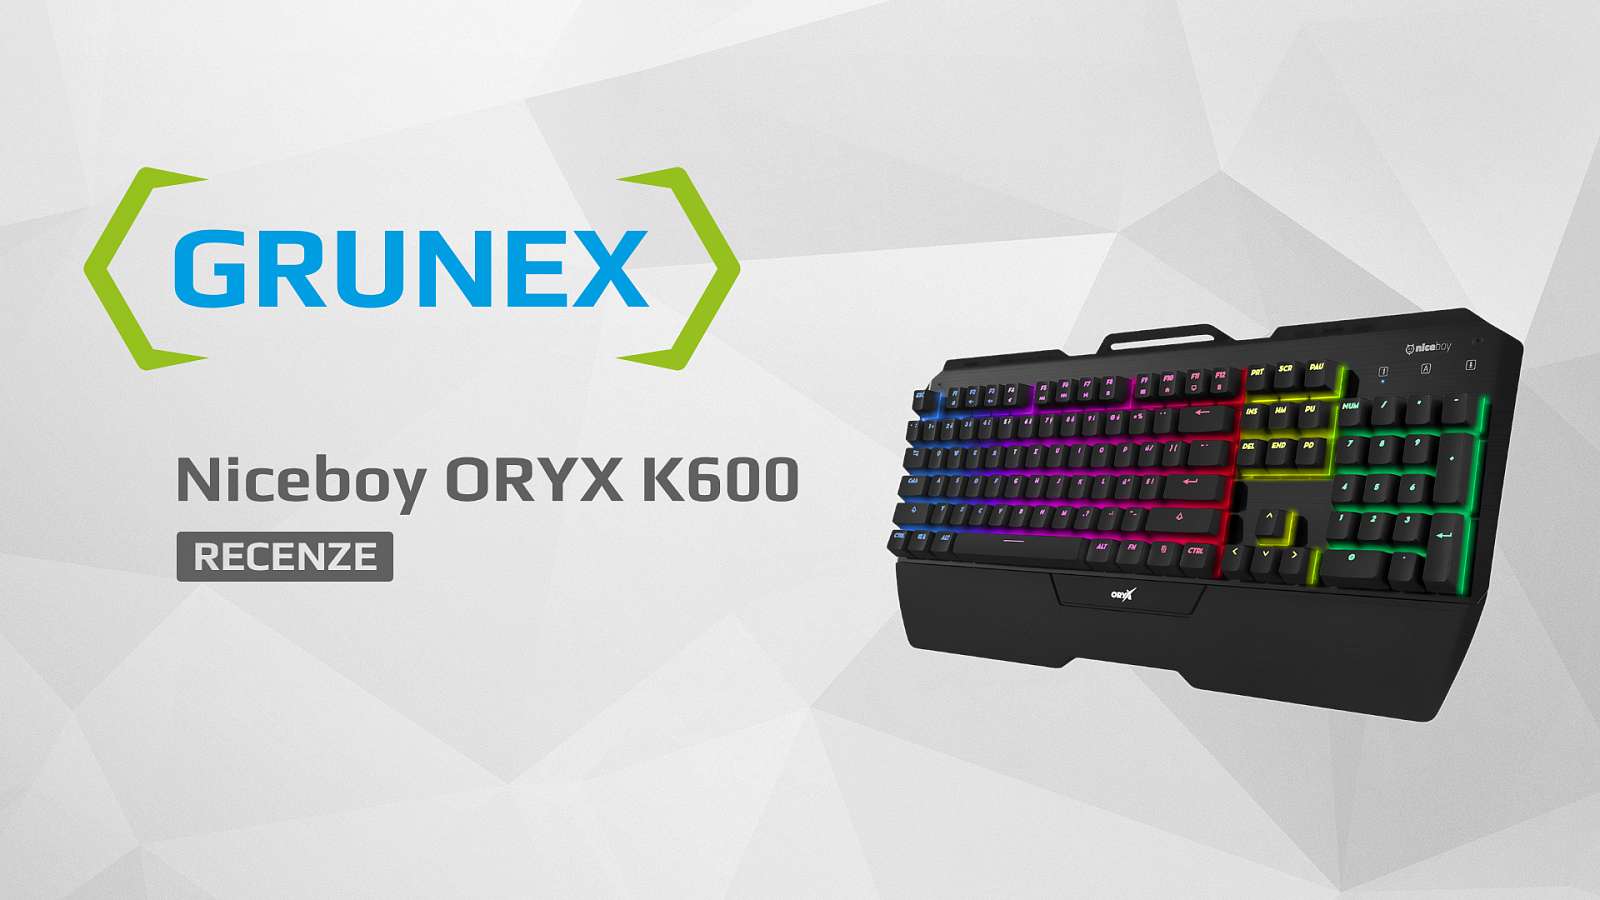 Recenze: Niceboy Oryx K600 - fajn klávesnice, až na ten software